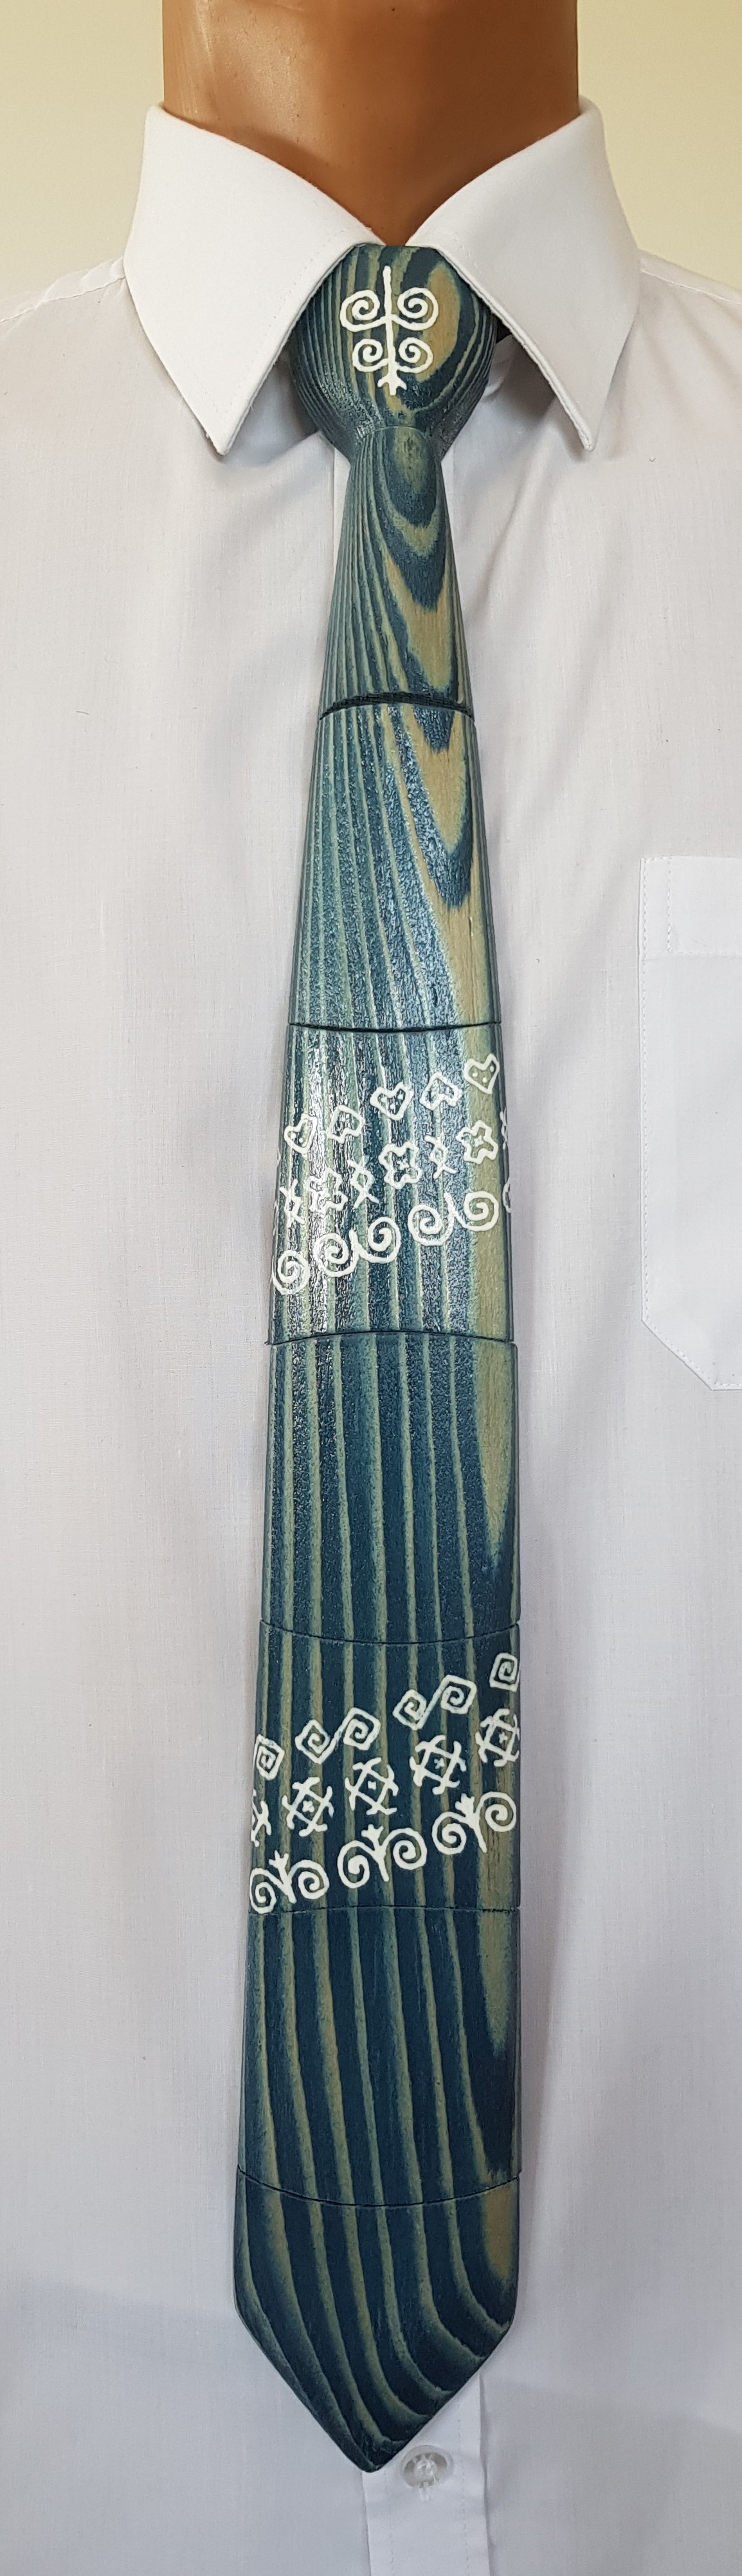 Drevená kravata 022